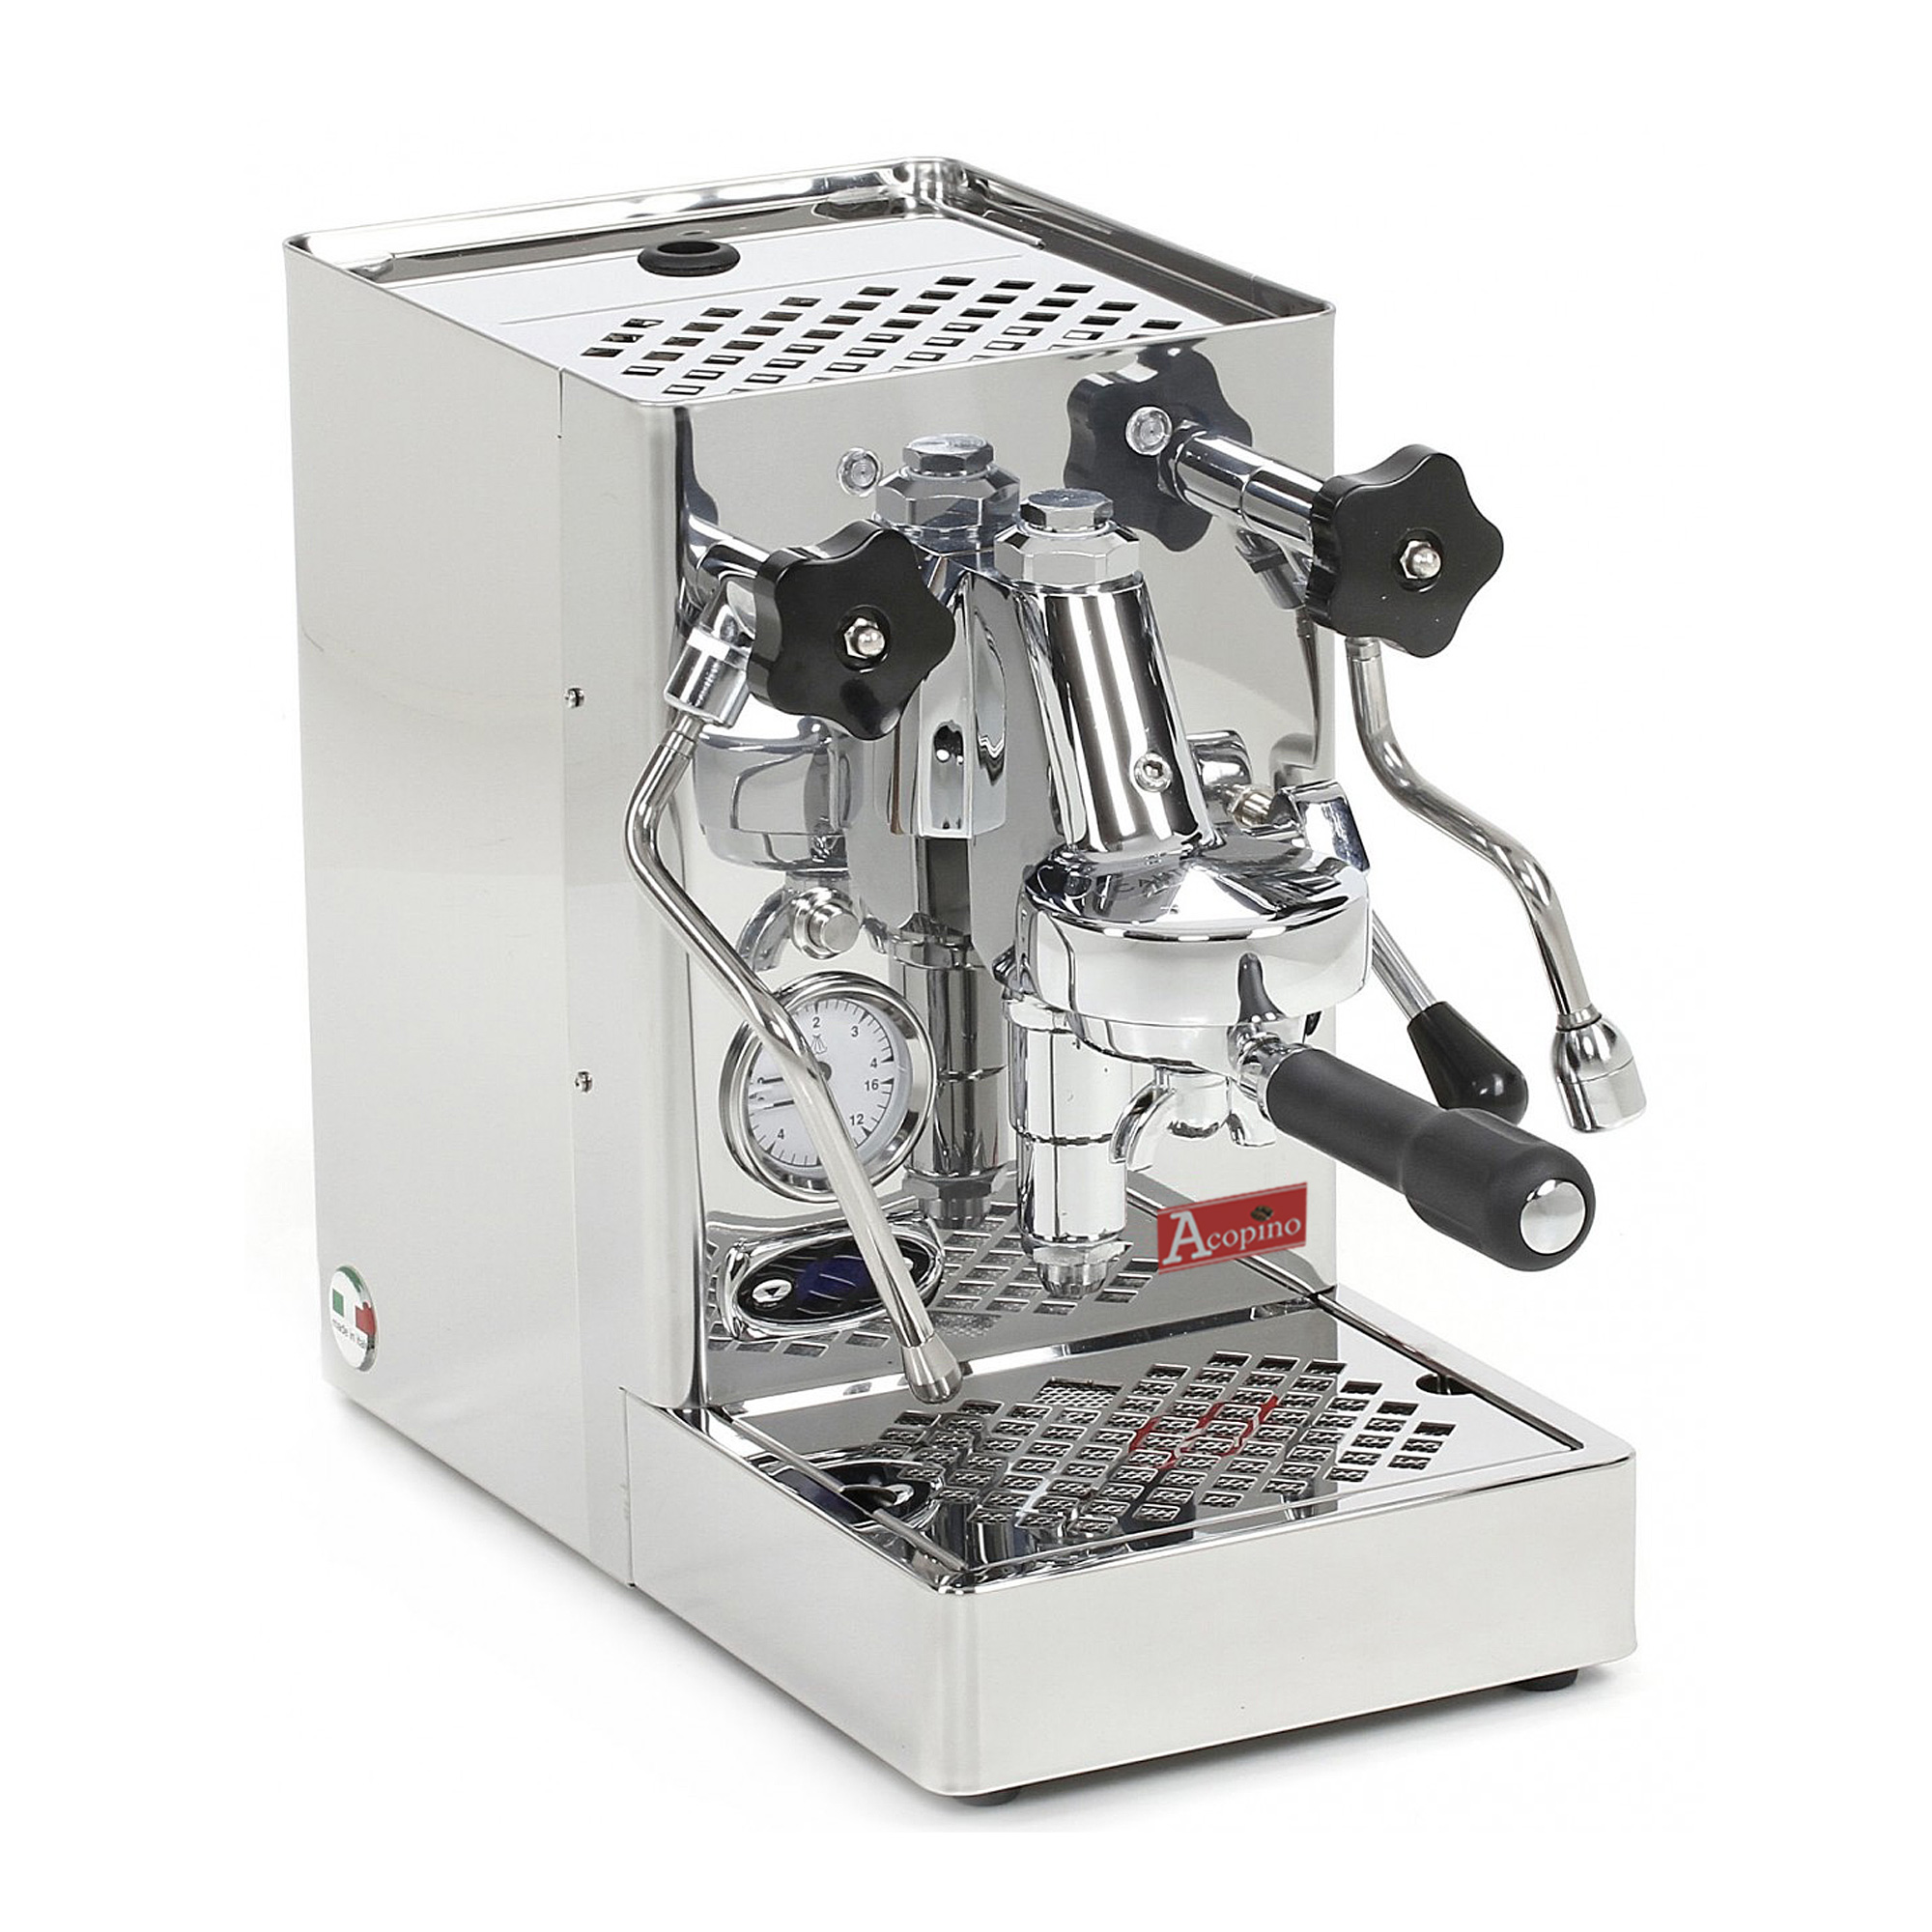 Lelit Pl62t Mara espresso profesionalgrupo l58e pid controlador temperatura del para el y capuchino 1400 w 2.5 litros acero inoxidable 15 2